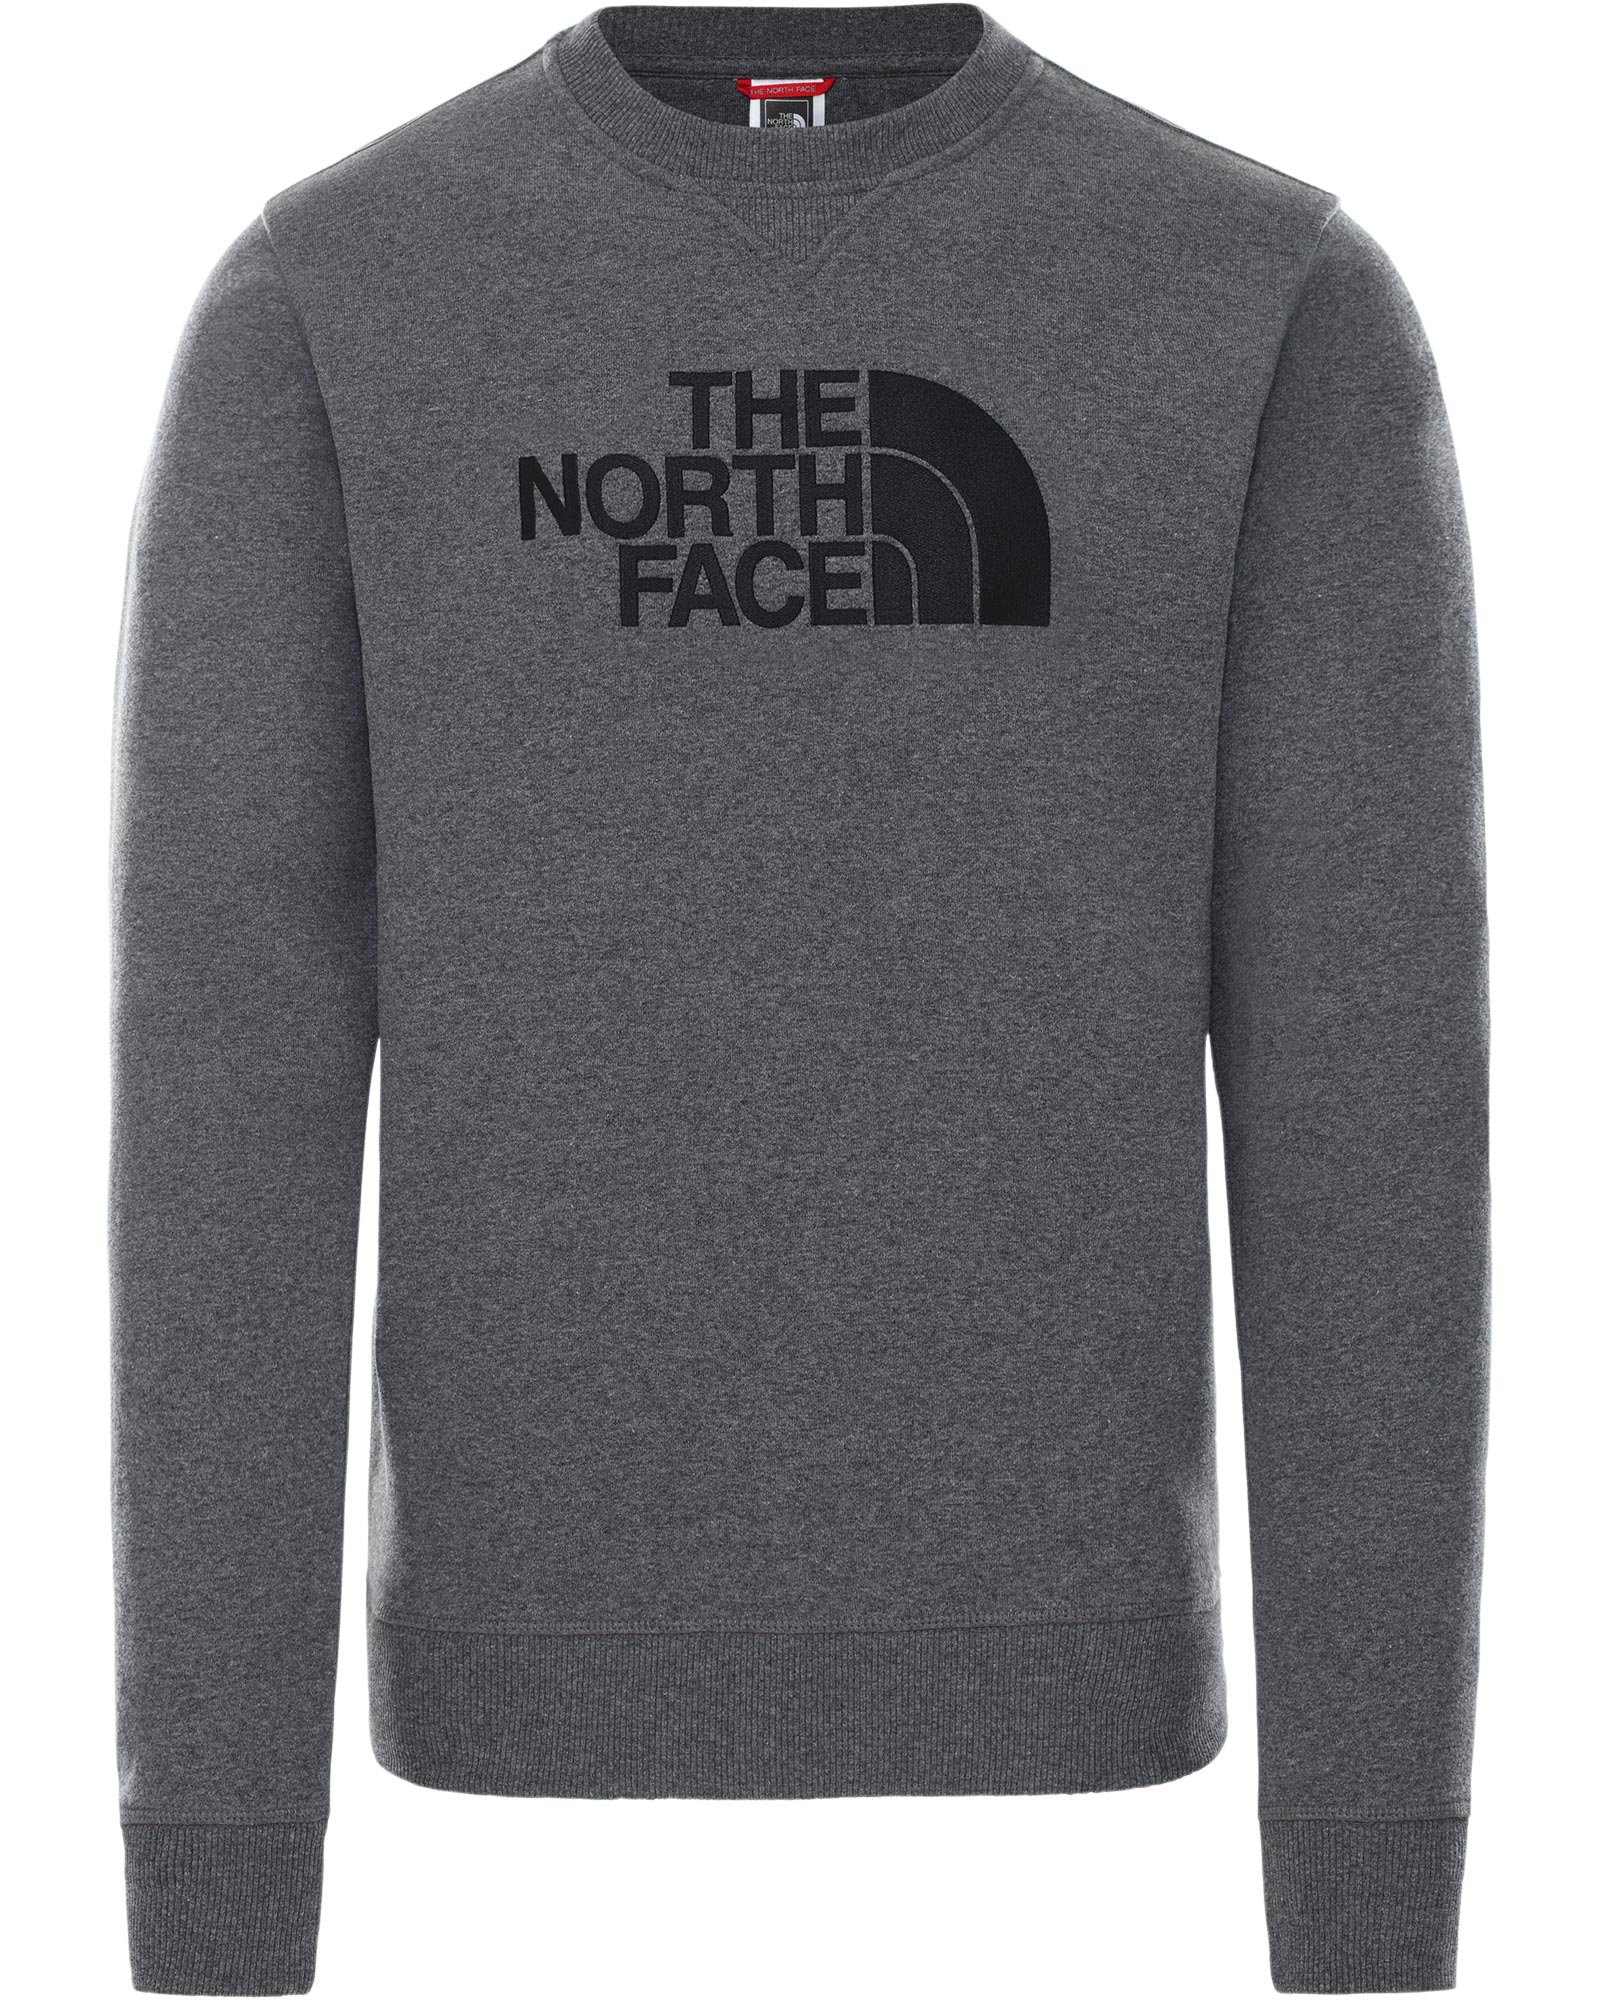 The North Face Drew Peak Men’s Crew - TNF Medium Grey Heather XS